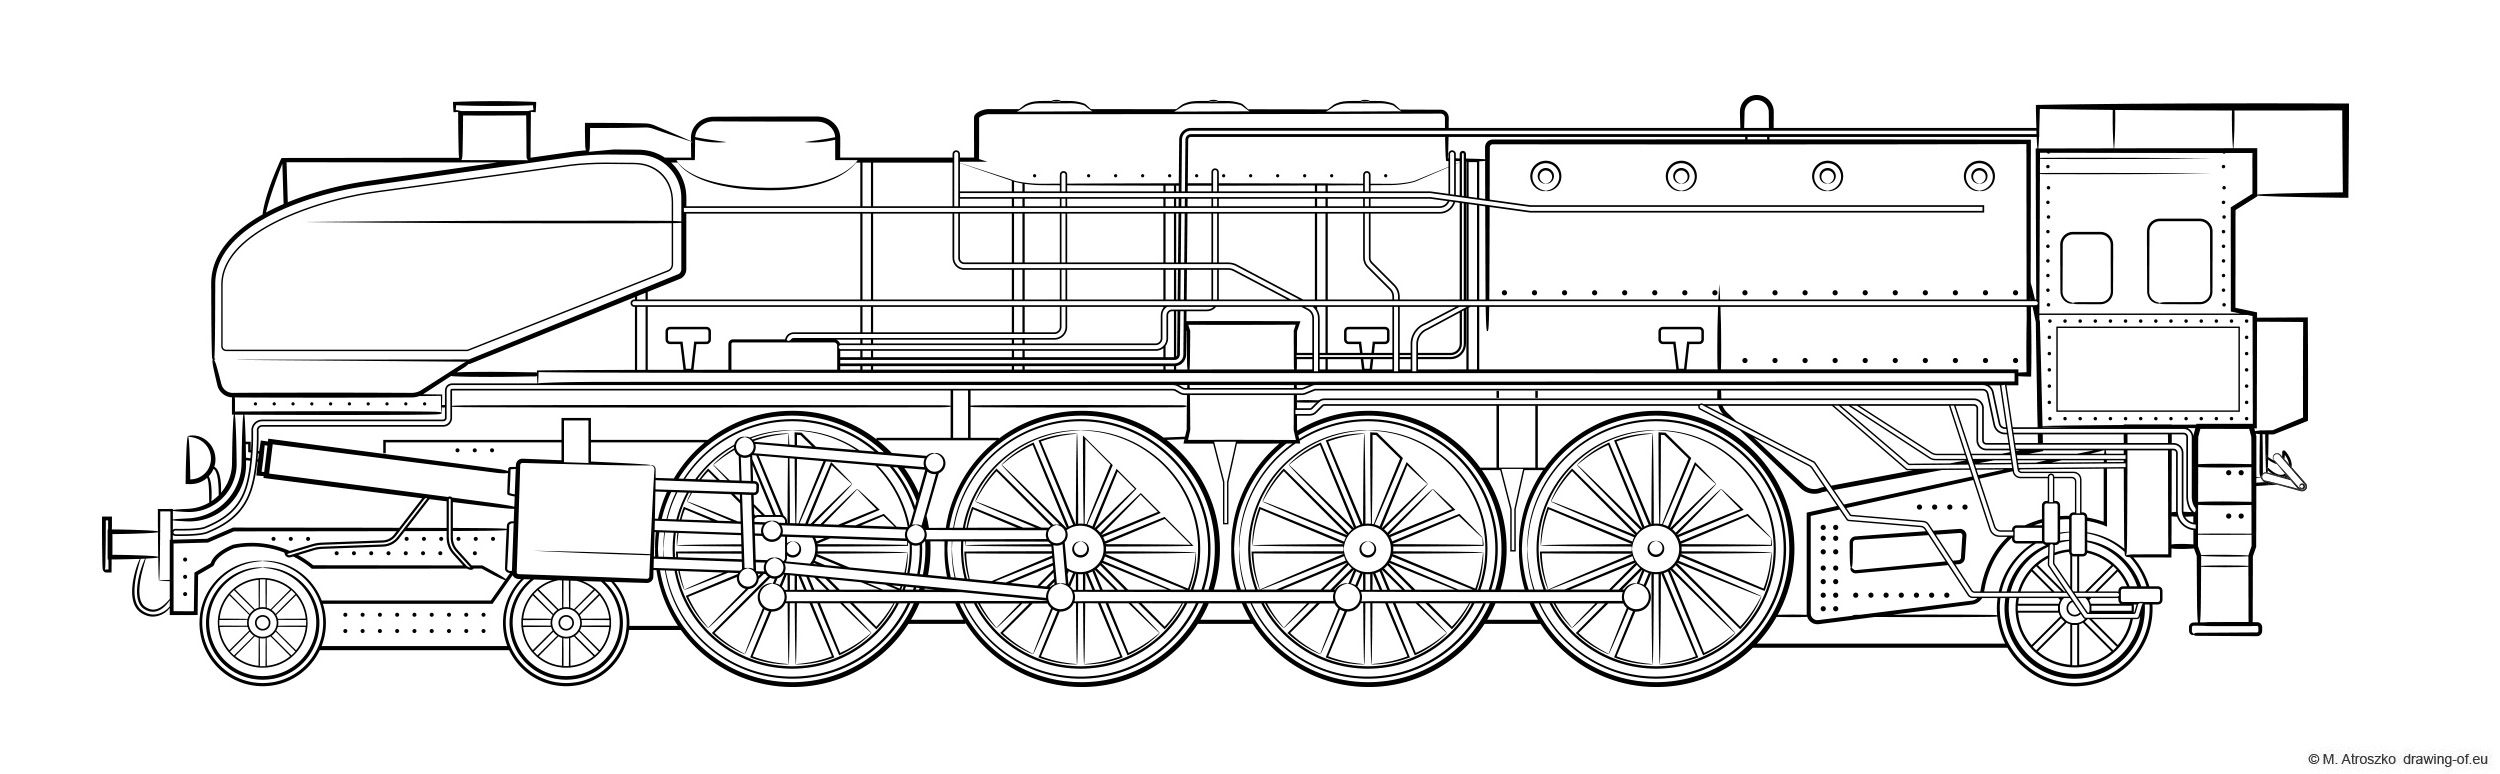 steam locomotive illustration